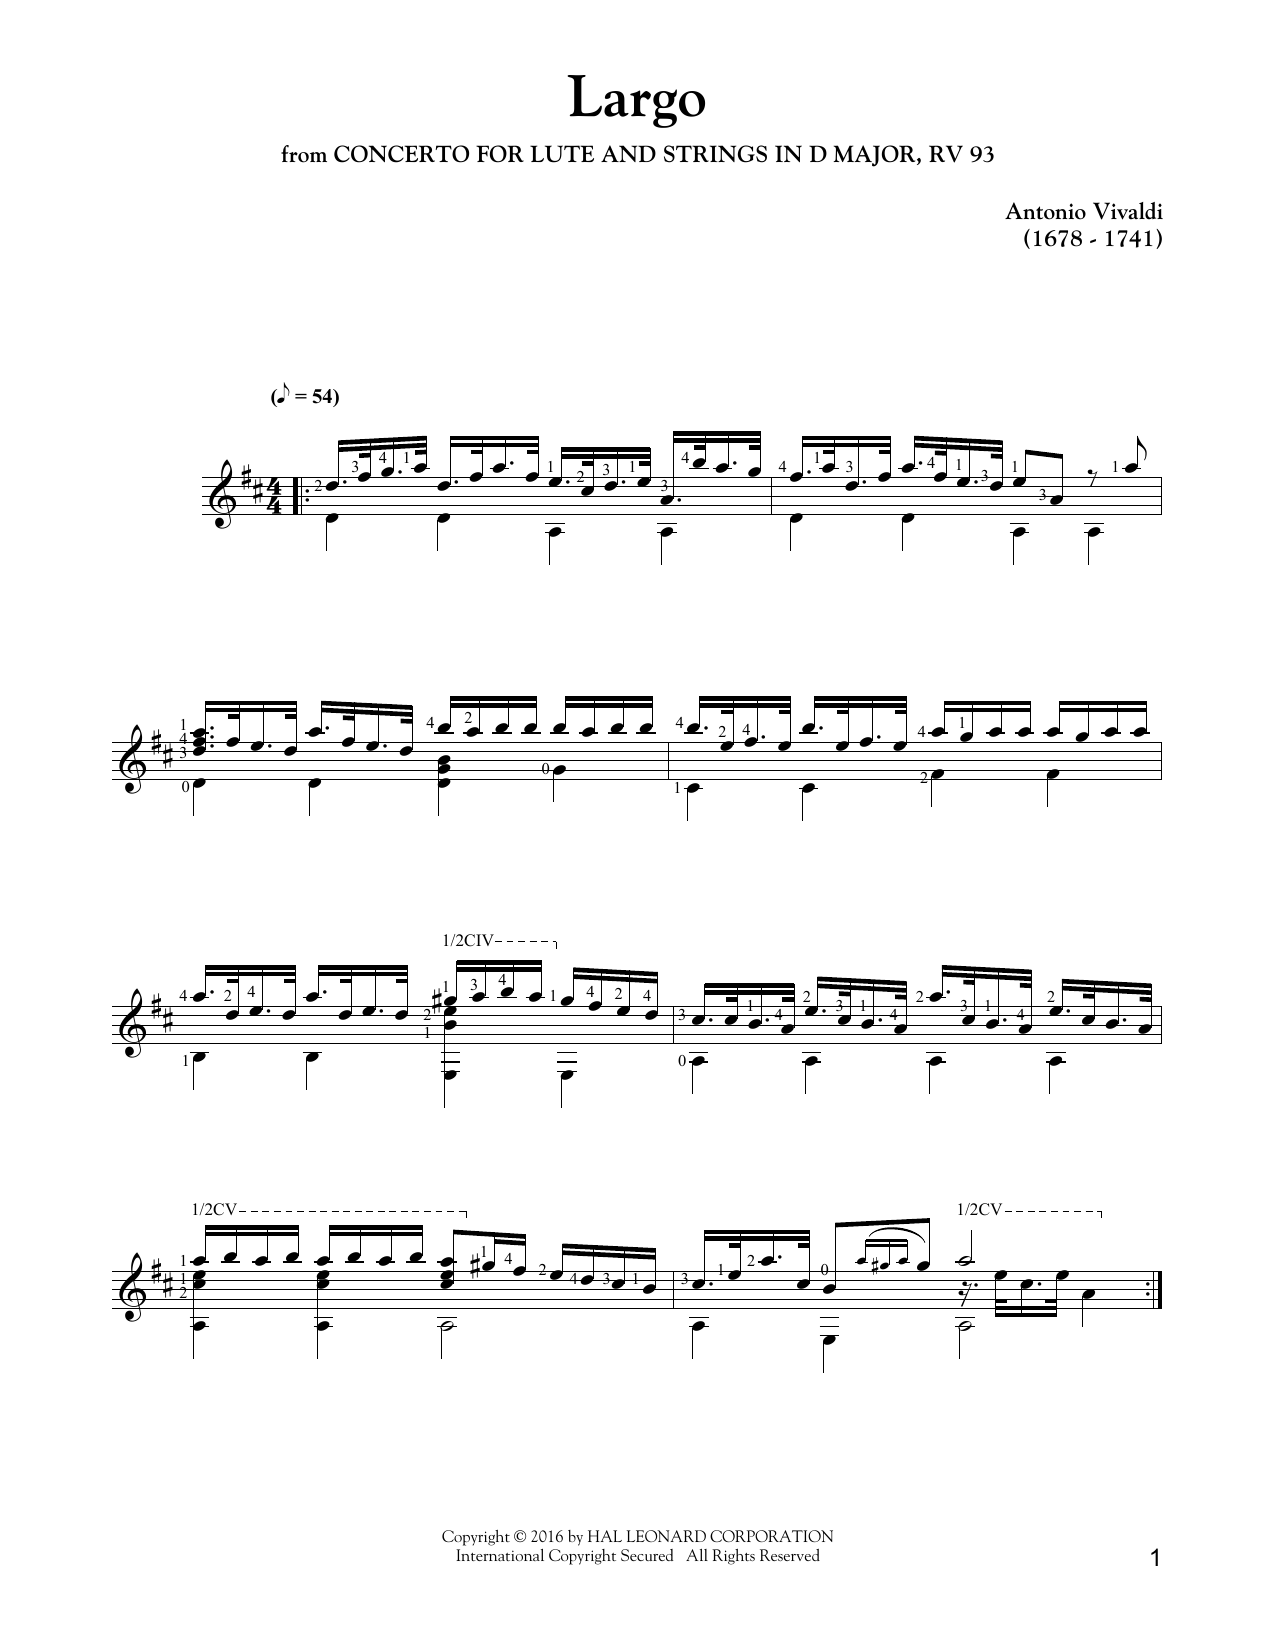 Antonio Vivaldi Largo sheet music notes and chords arranged for Solo Guitar